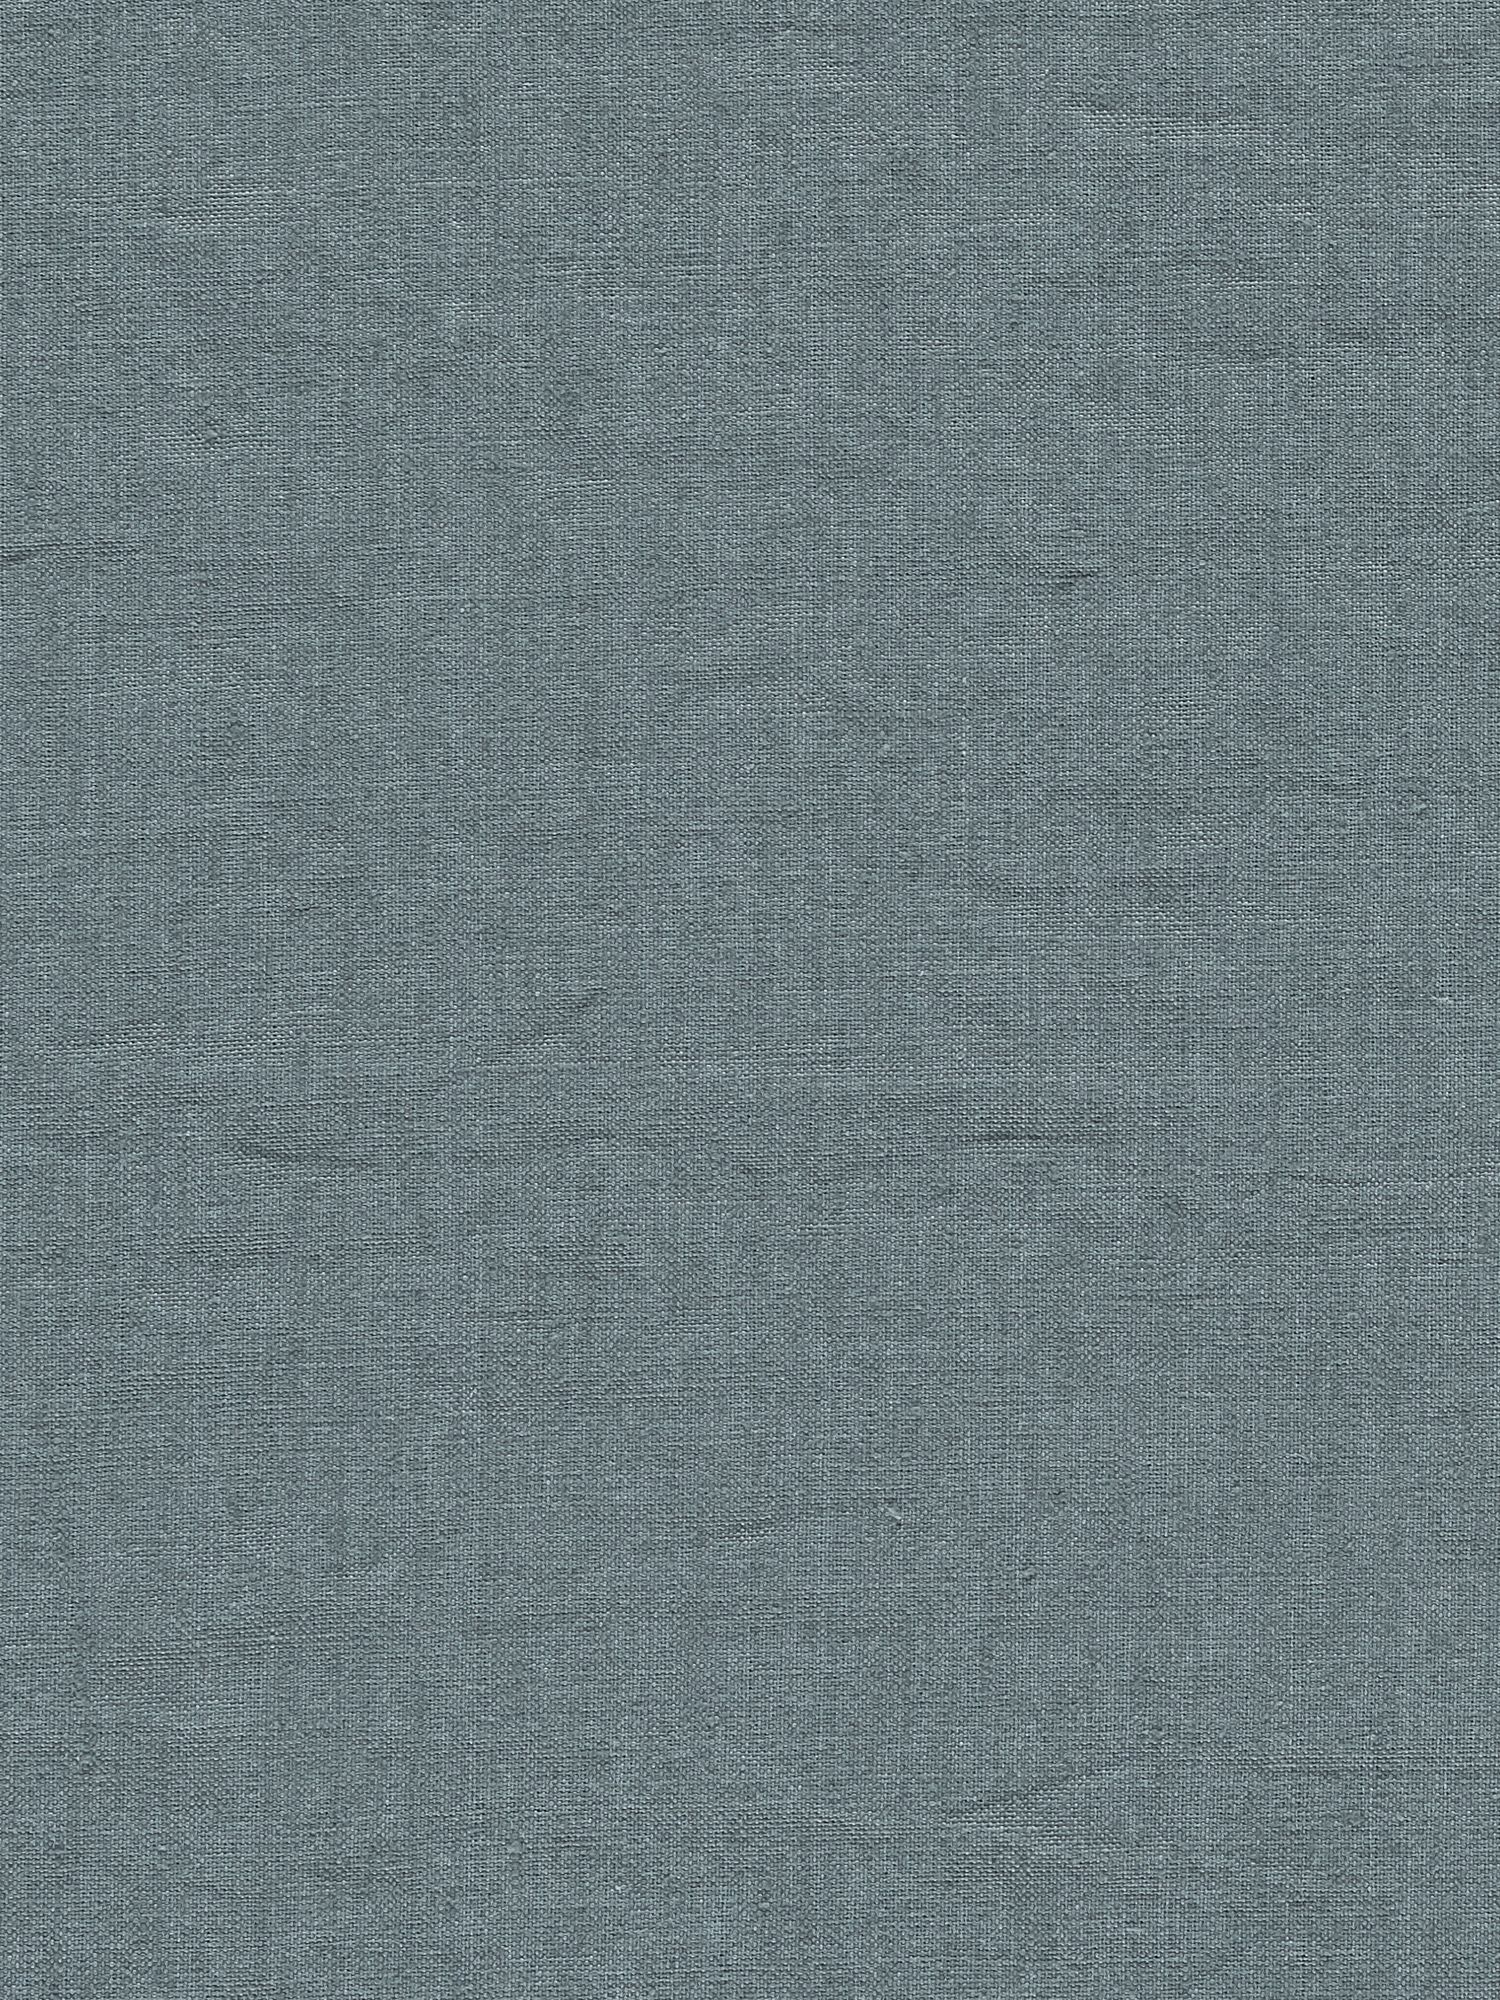 Sanderson Rue Linen Furnishing Fabric, Mercury